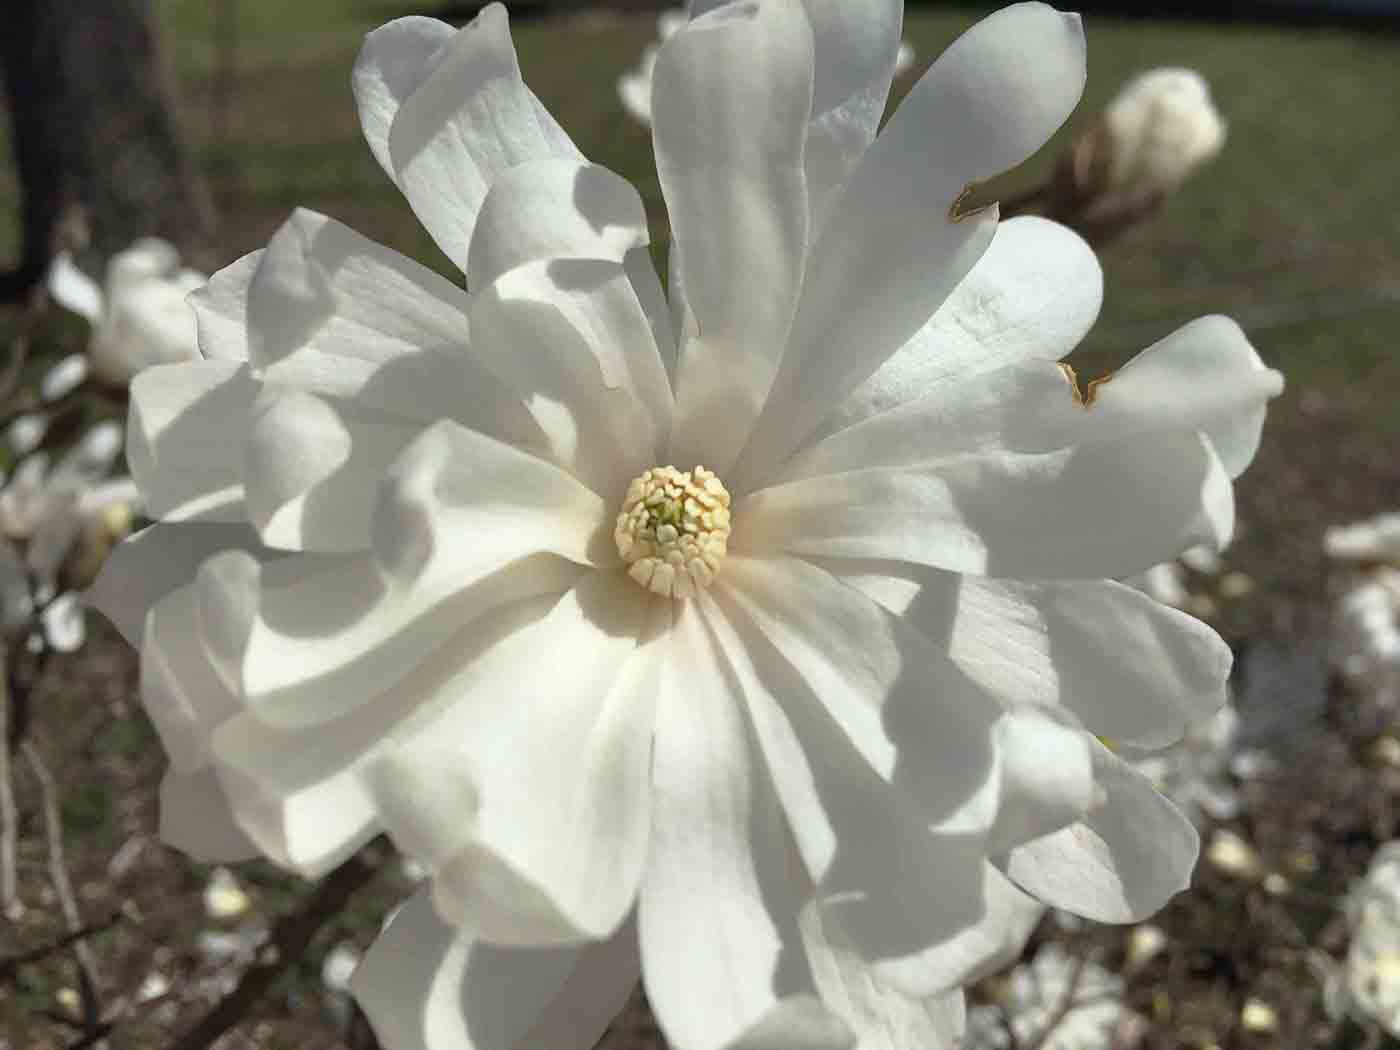 Star magnolia flower